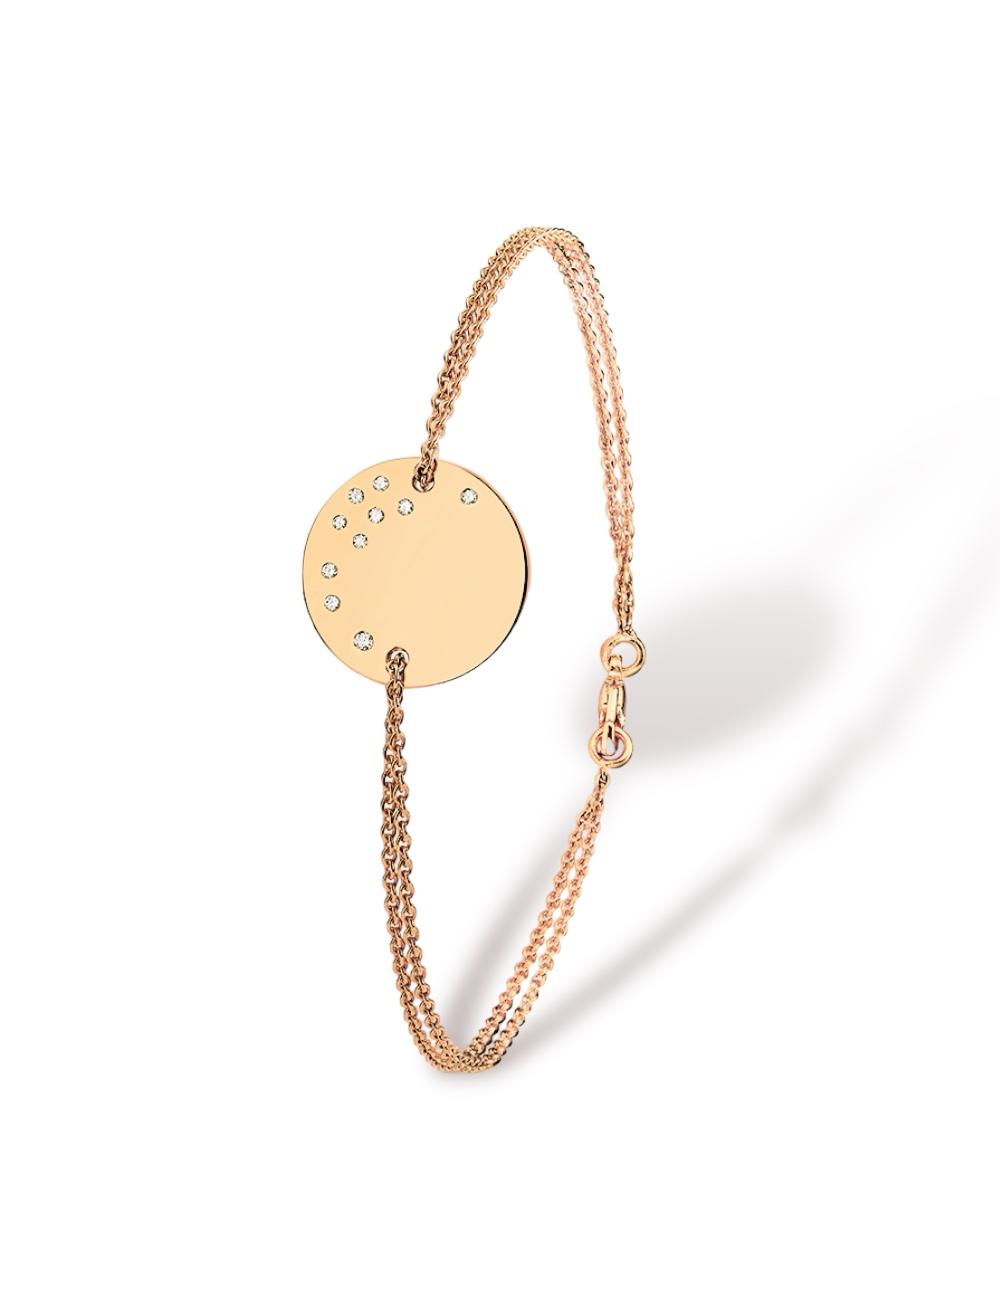 Rose Gold Medallion Bracelet, capturing the softness and femininity of this trendy hue.